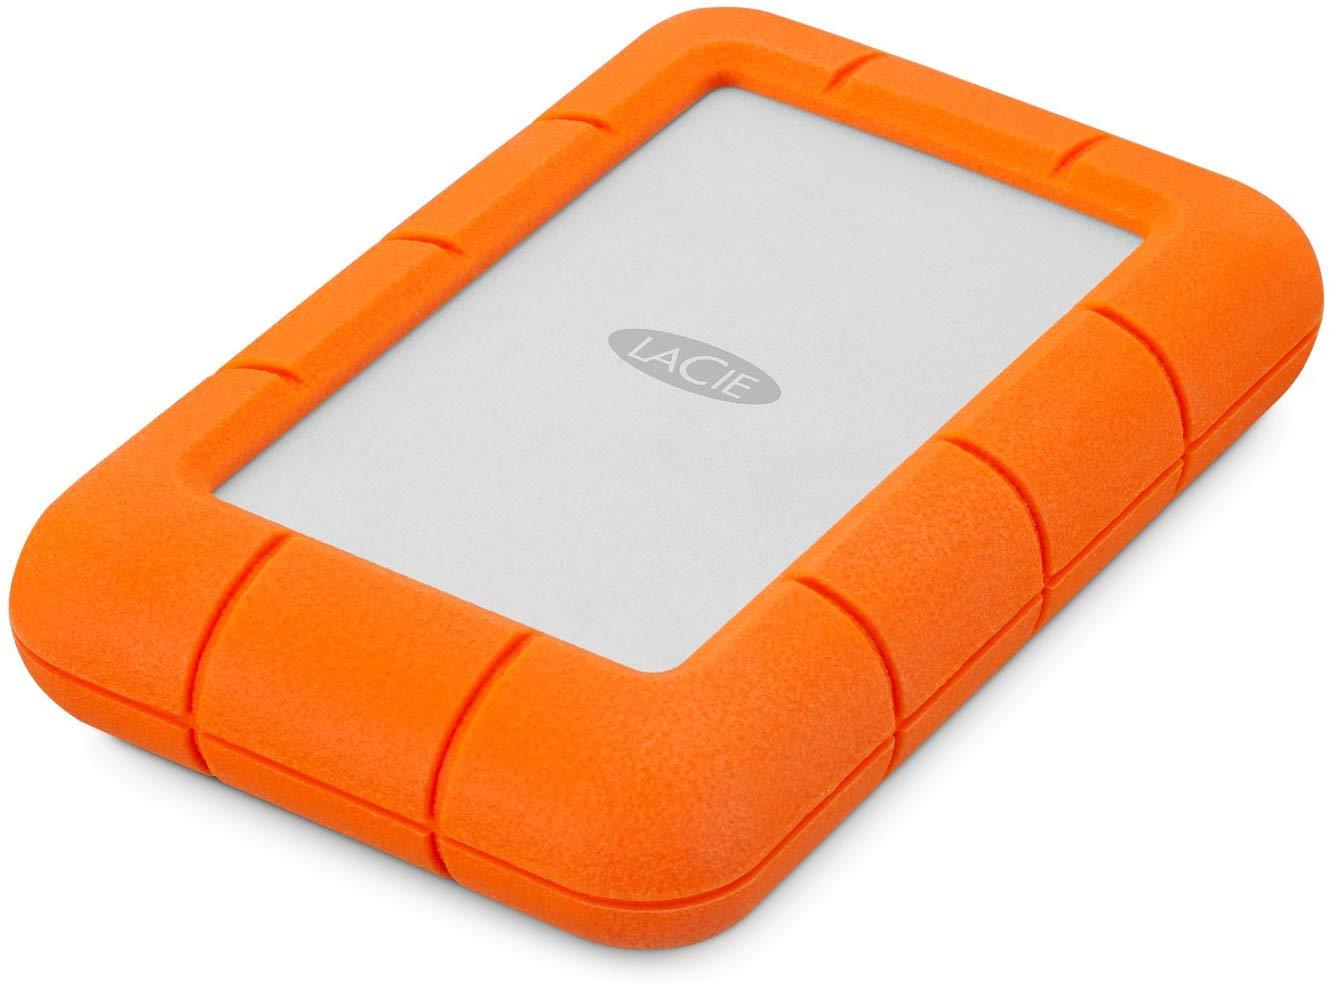 LaCie Rugged Mini 4TB External Hard Drive Portable HDD